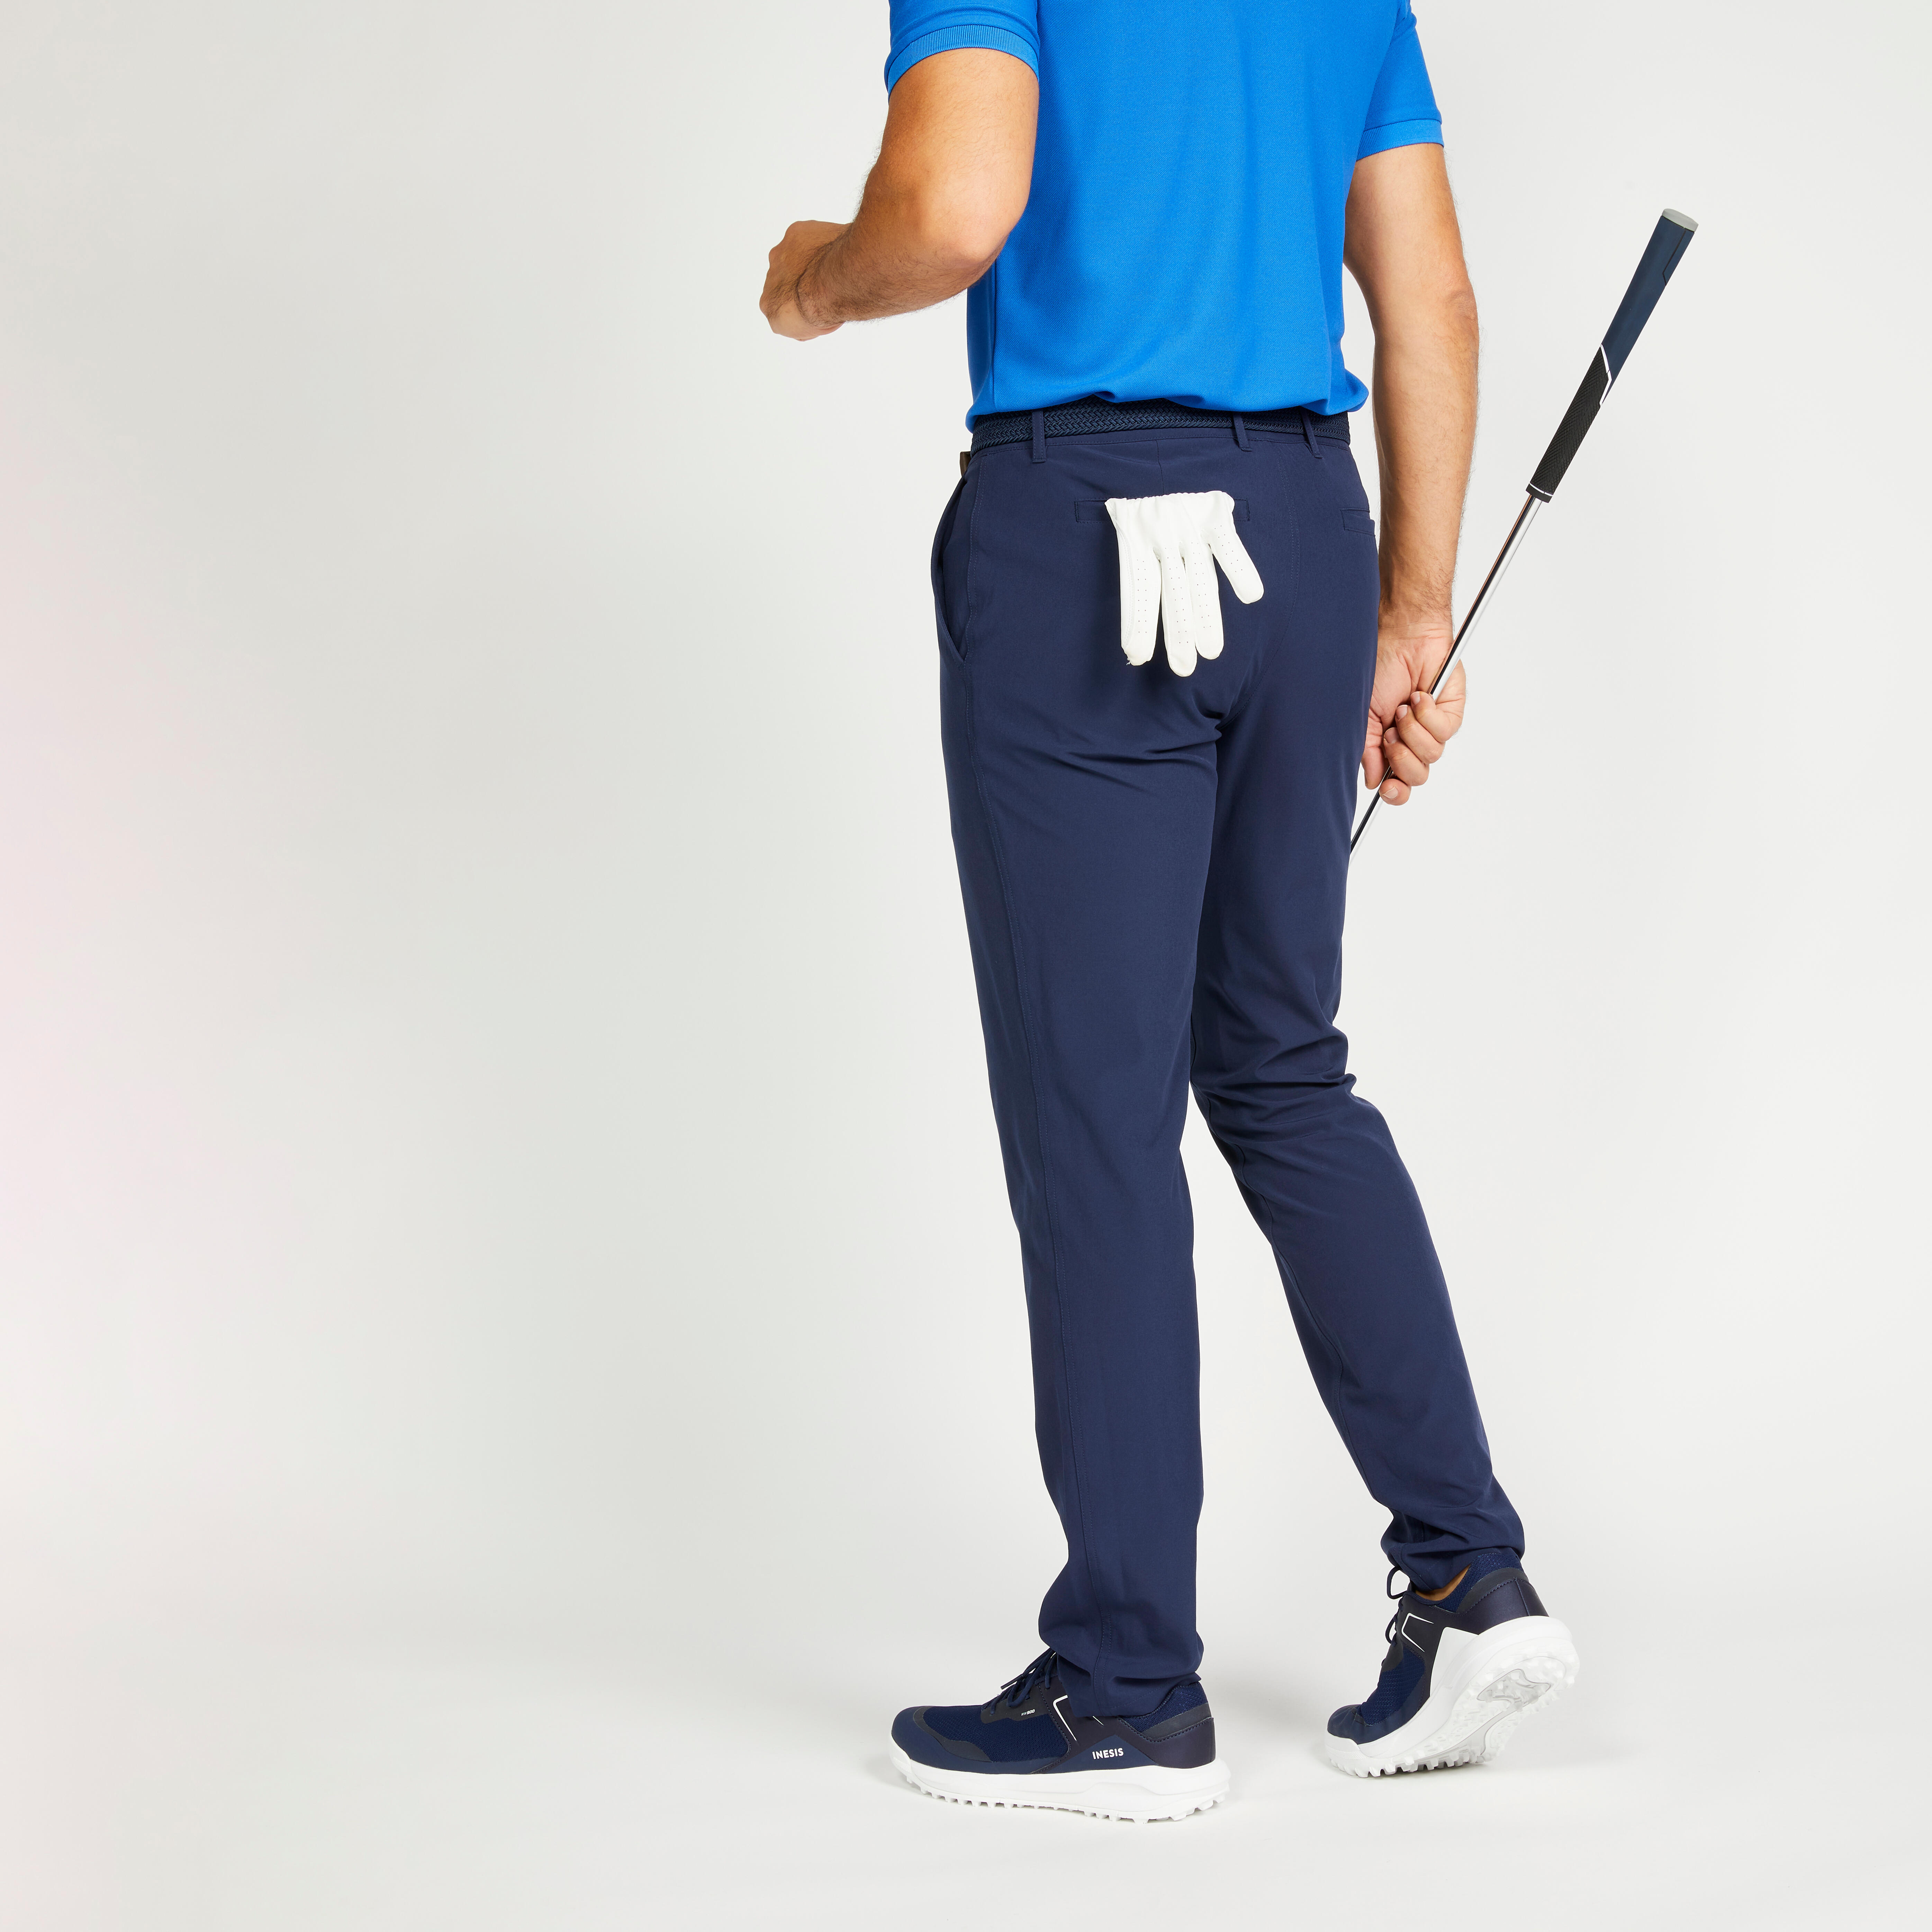 LUSHENUNI Men's Golf Pants Slim High Stretch, Ice Silk Dress Pants